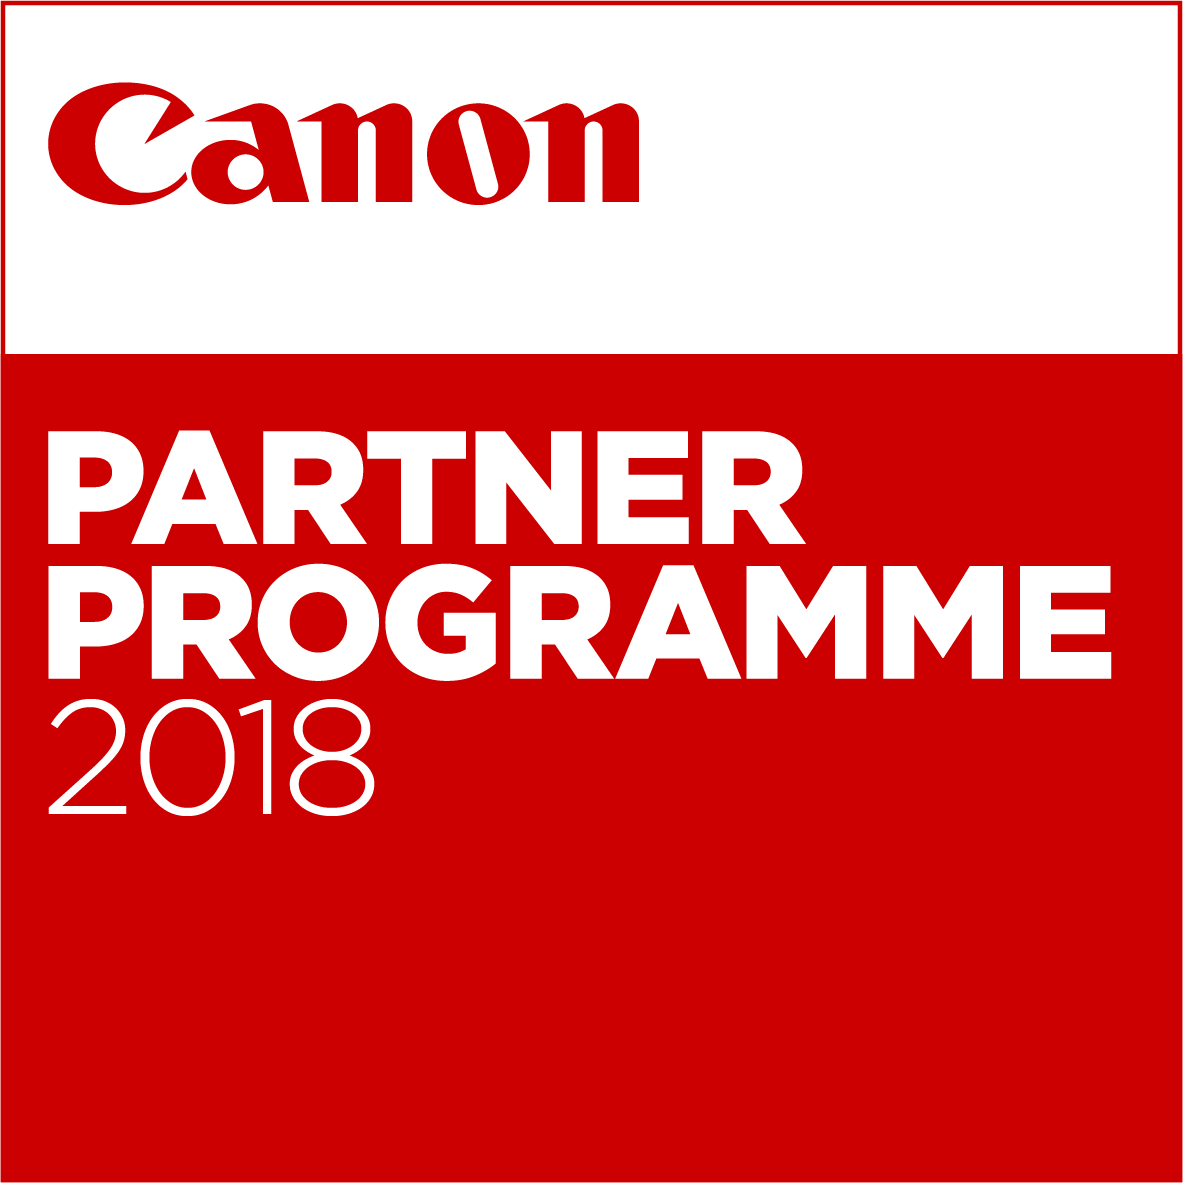 Canon Partner Programme 2018